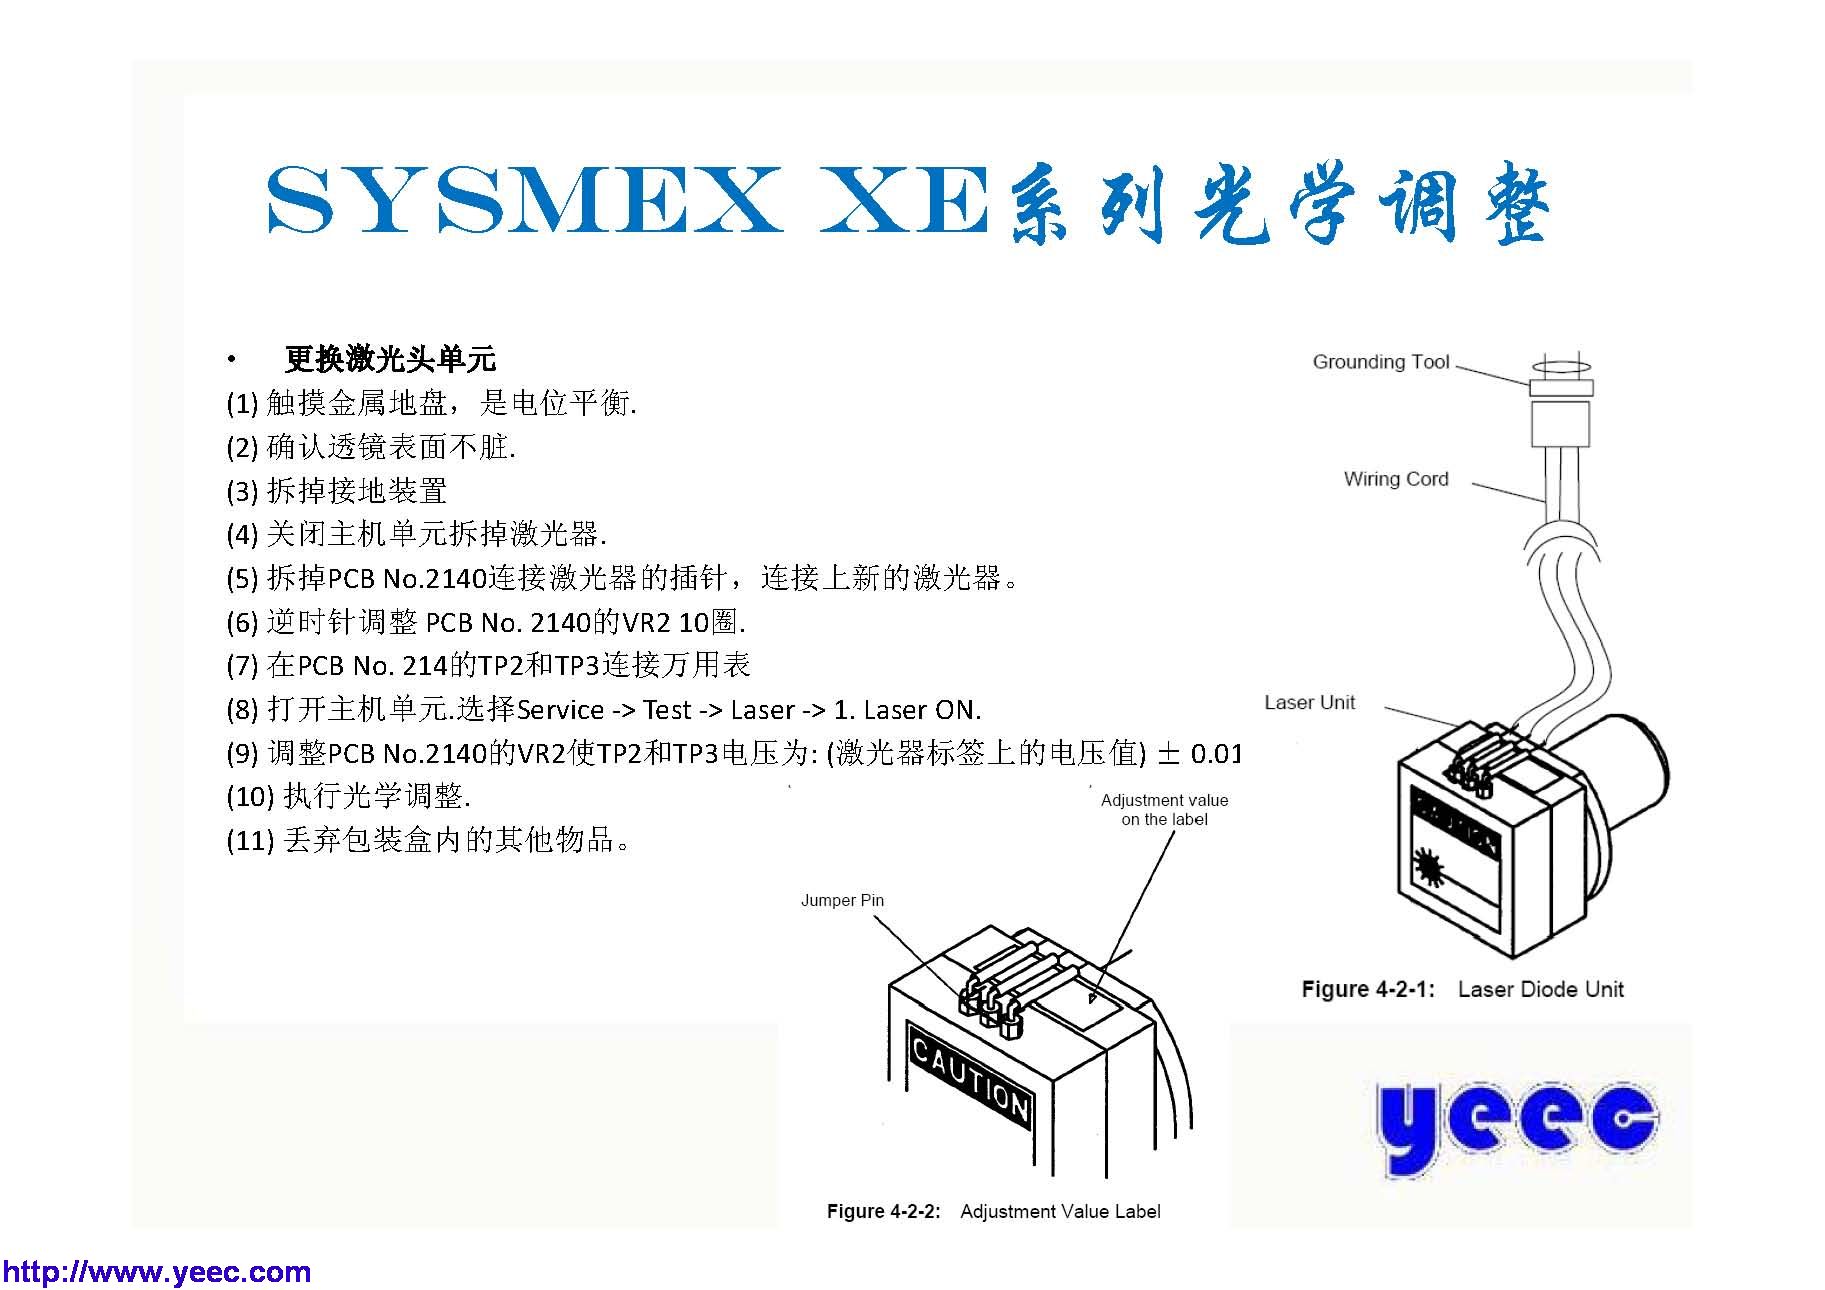 sysmex xe系列维修保养详解_页面_051.jpg